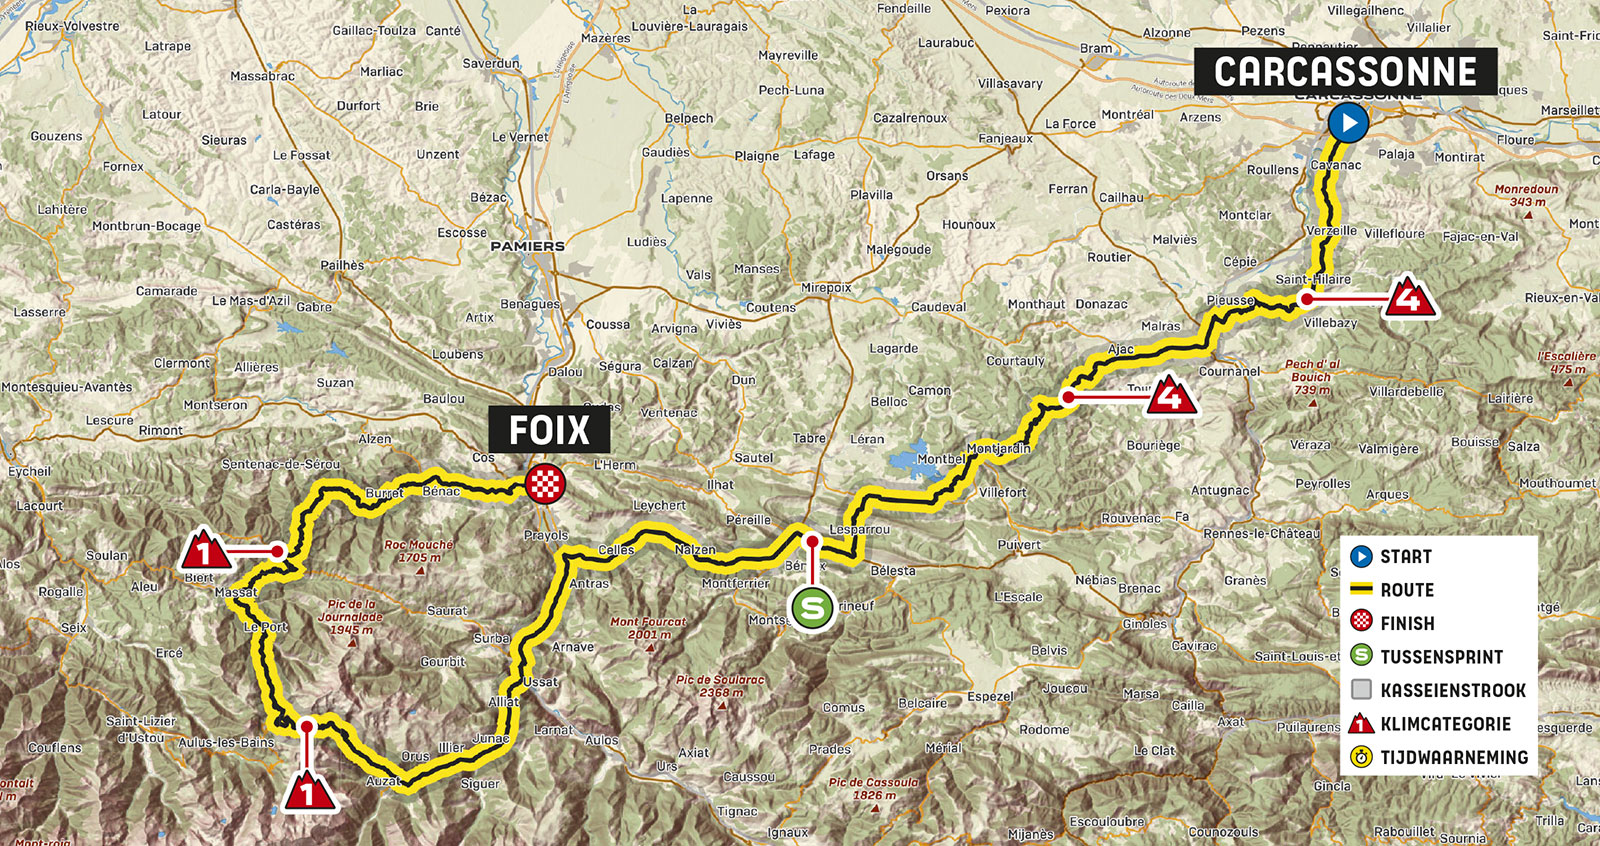 Carcassonne - Foix  | Routekaart